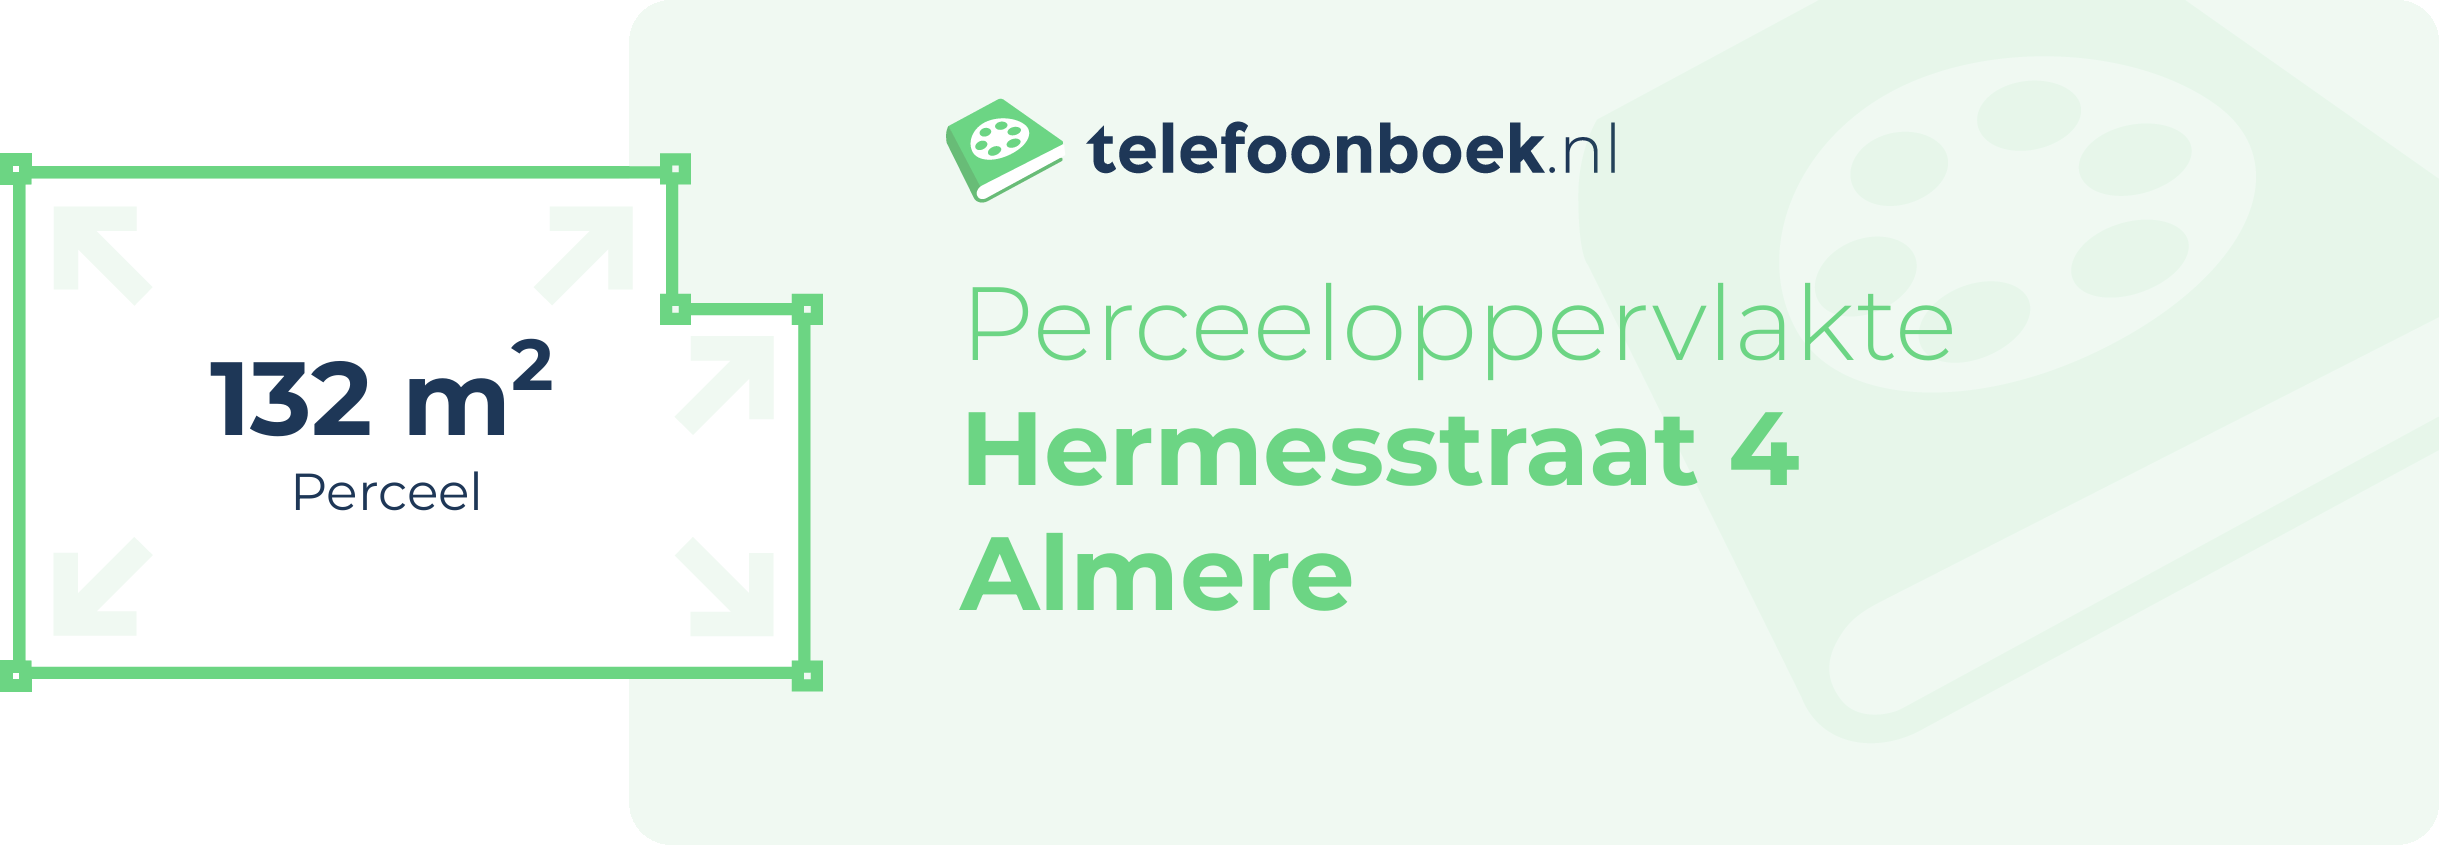 Perceeloppervlakte Hermesstraat 4 Almere